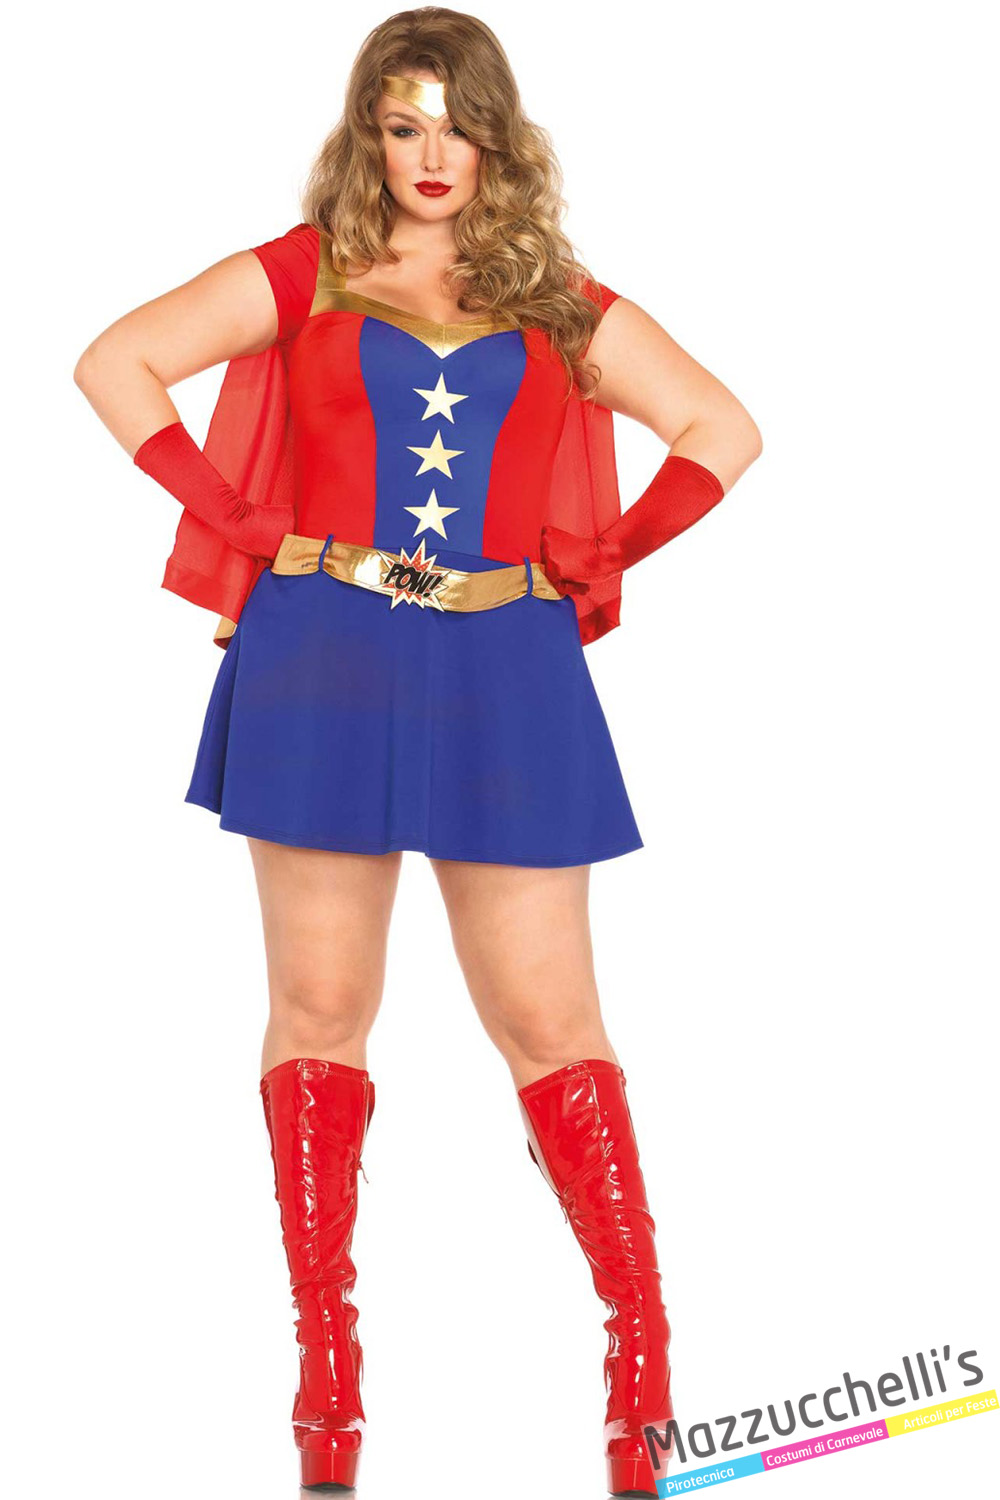 Costume Wonder Woman Curvy in vendita a Samarate Varese da Mazzucchellis